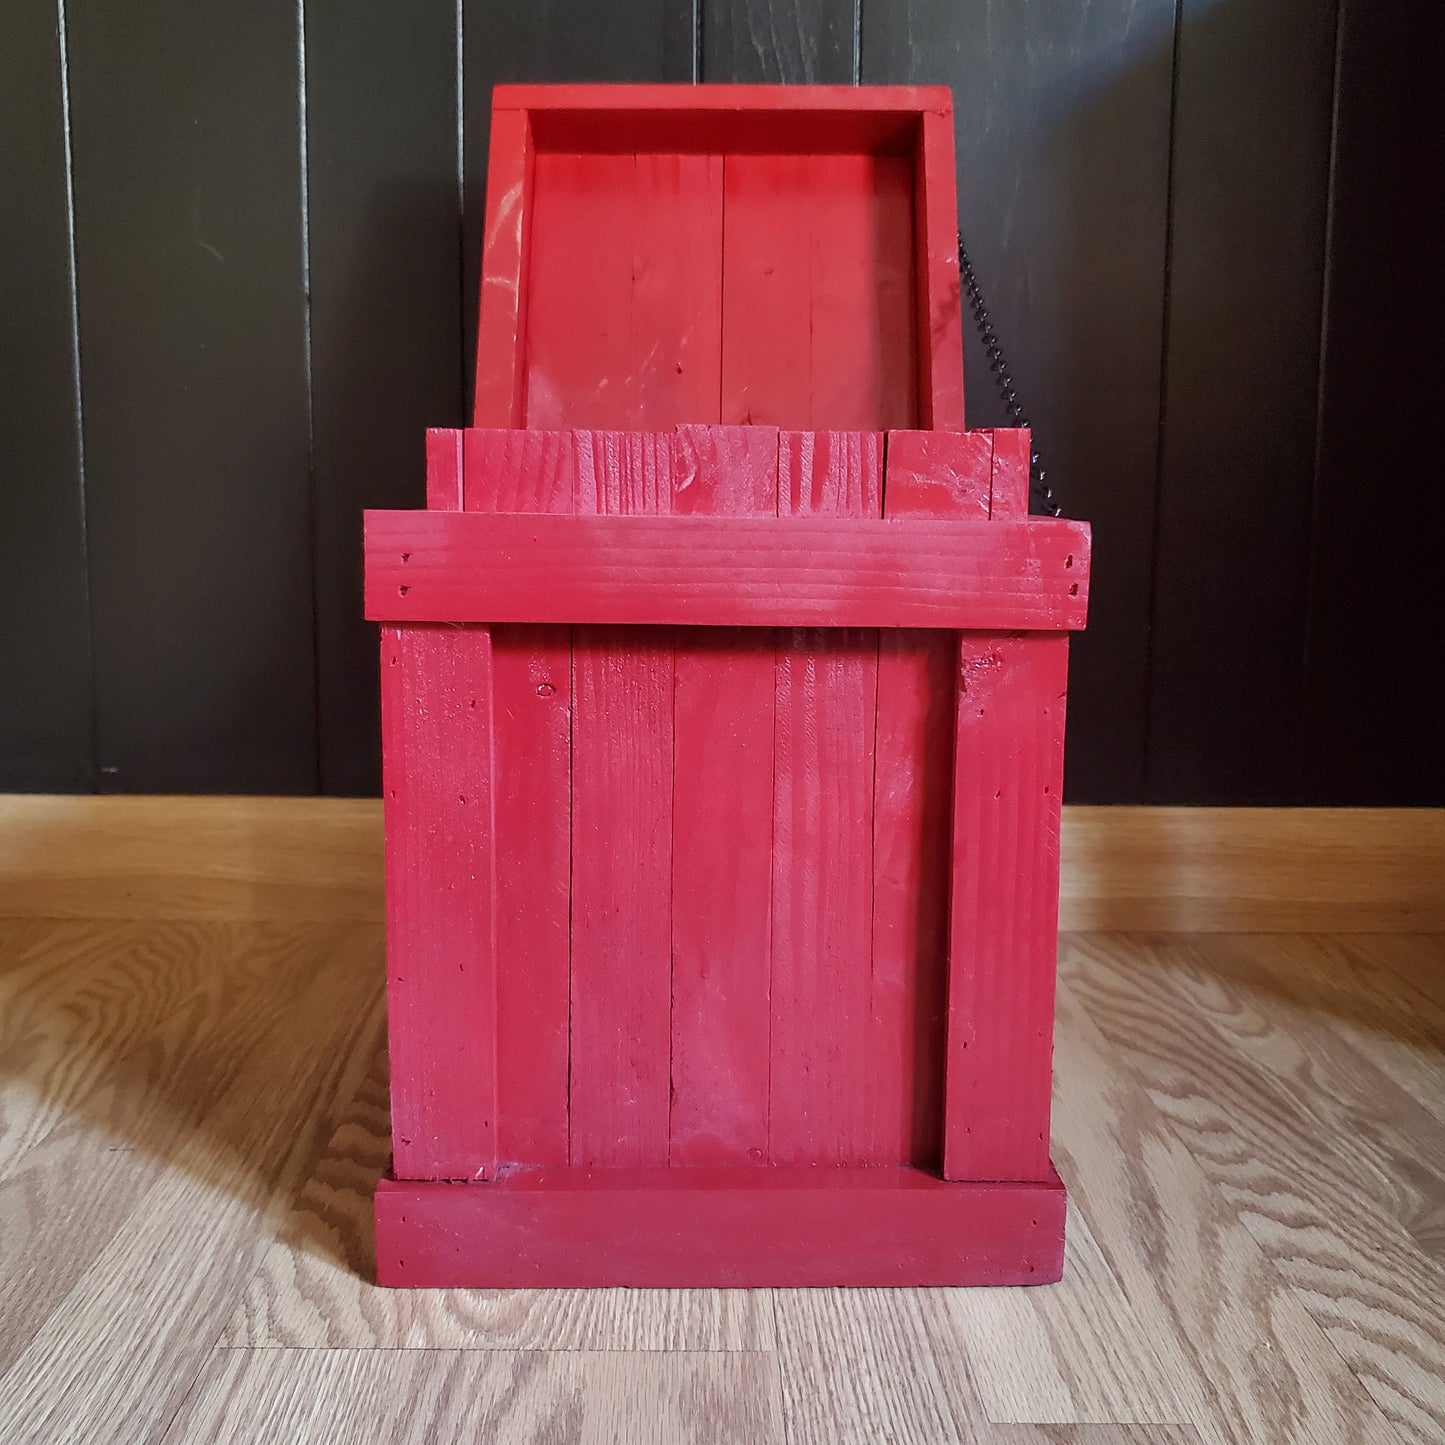 4 Gallon Red Bathroom Trash Bin